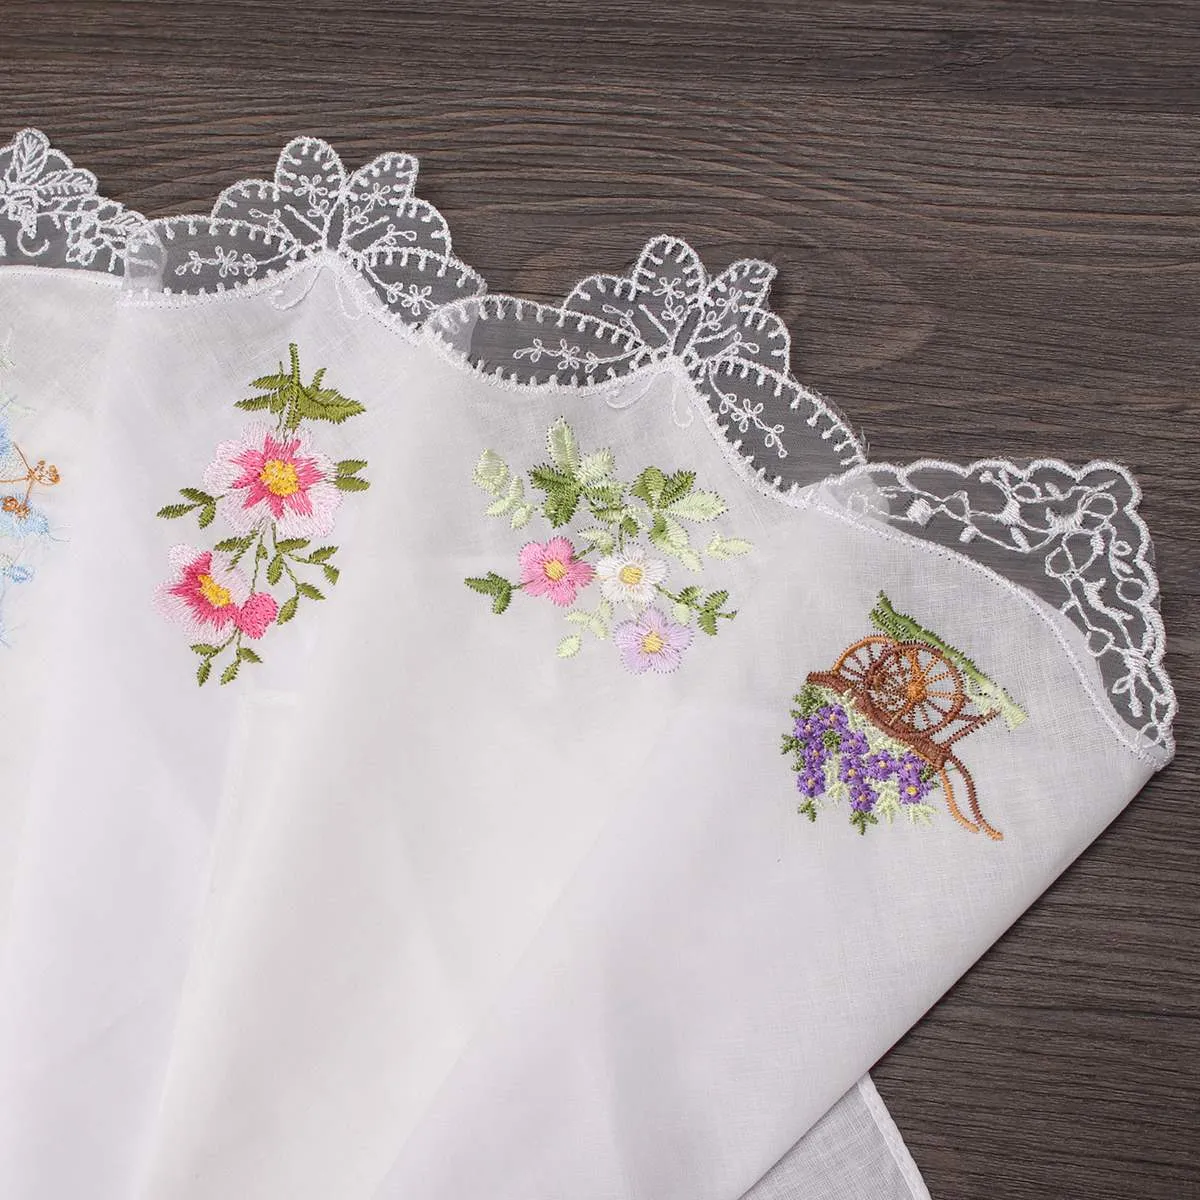 24 stks Vintage katoenen vrouwen hankies geborduurde vlinder kant bloem hanky floral geassorteerde doek dames zakdoek stoffen